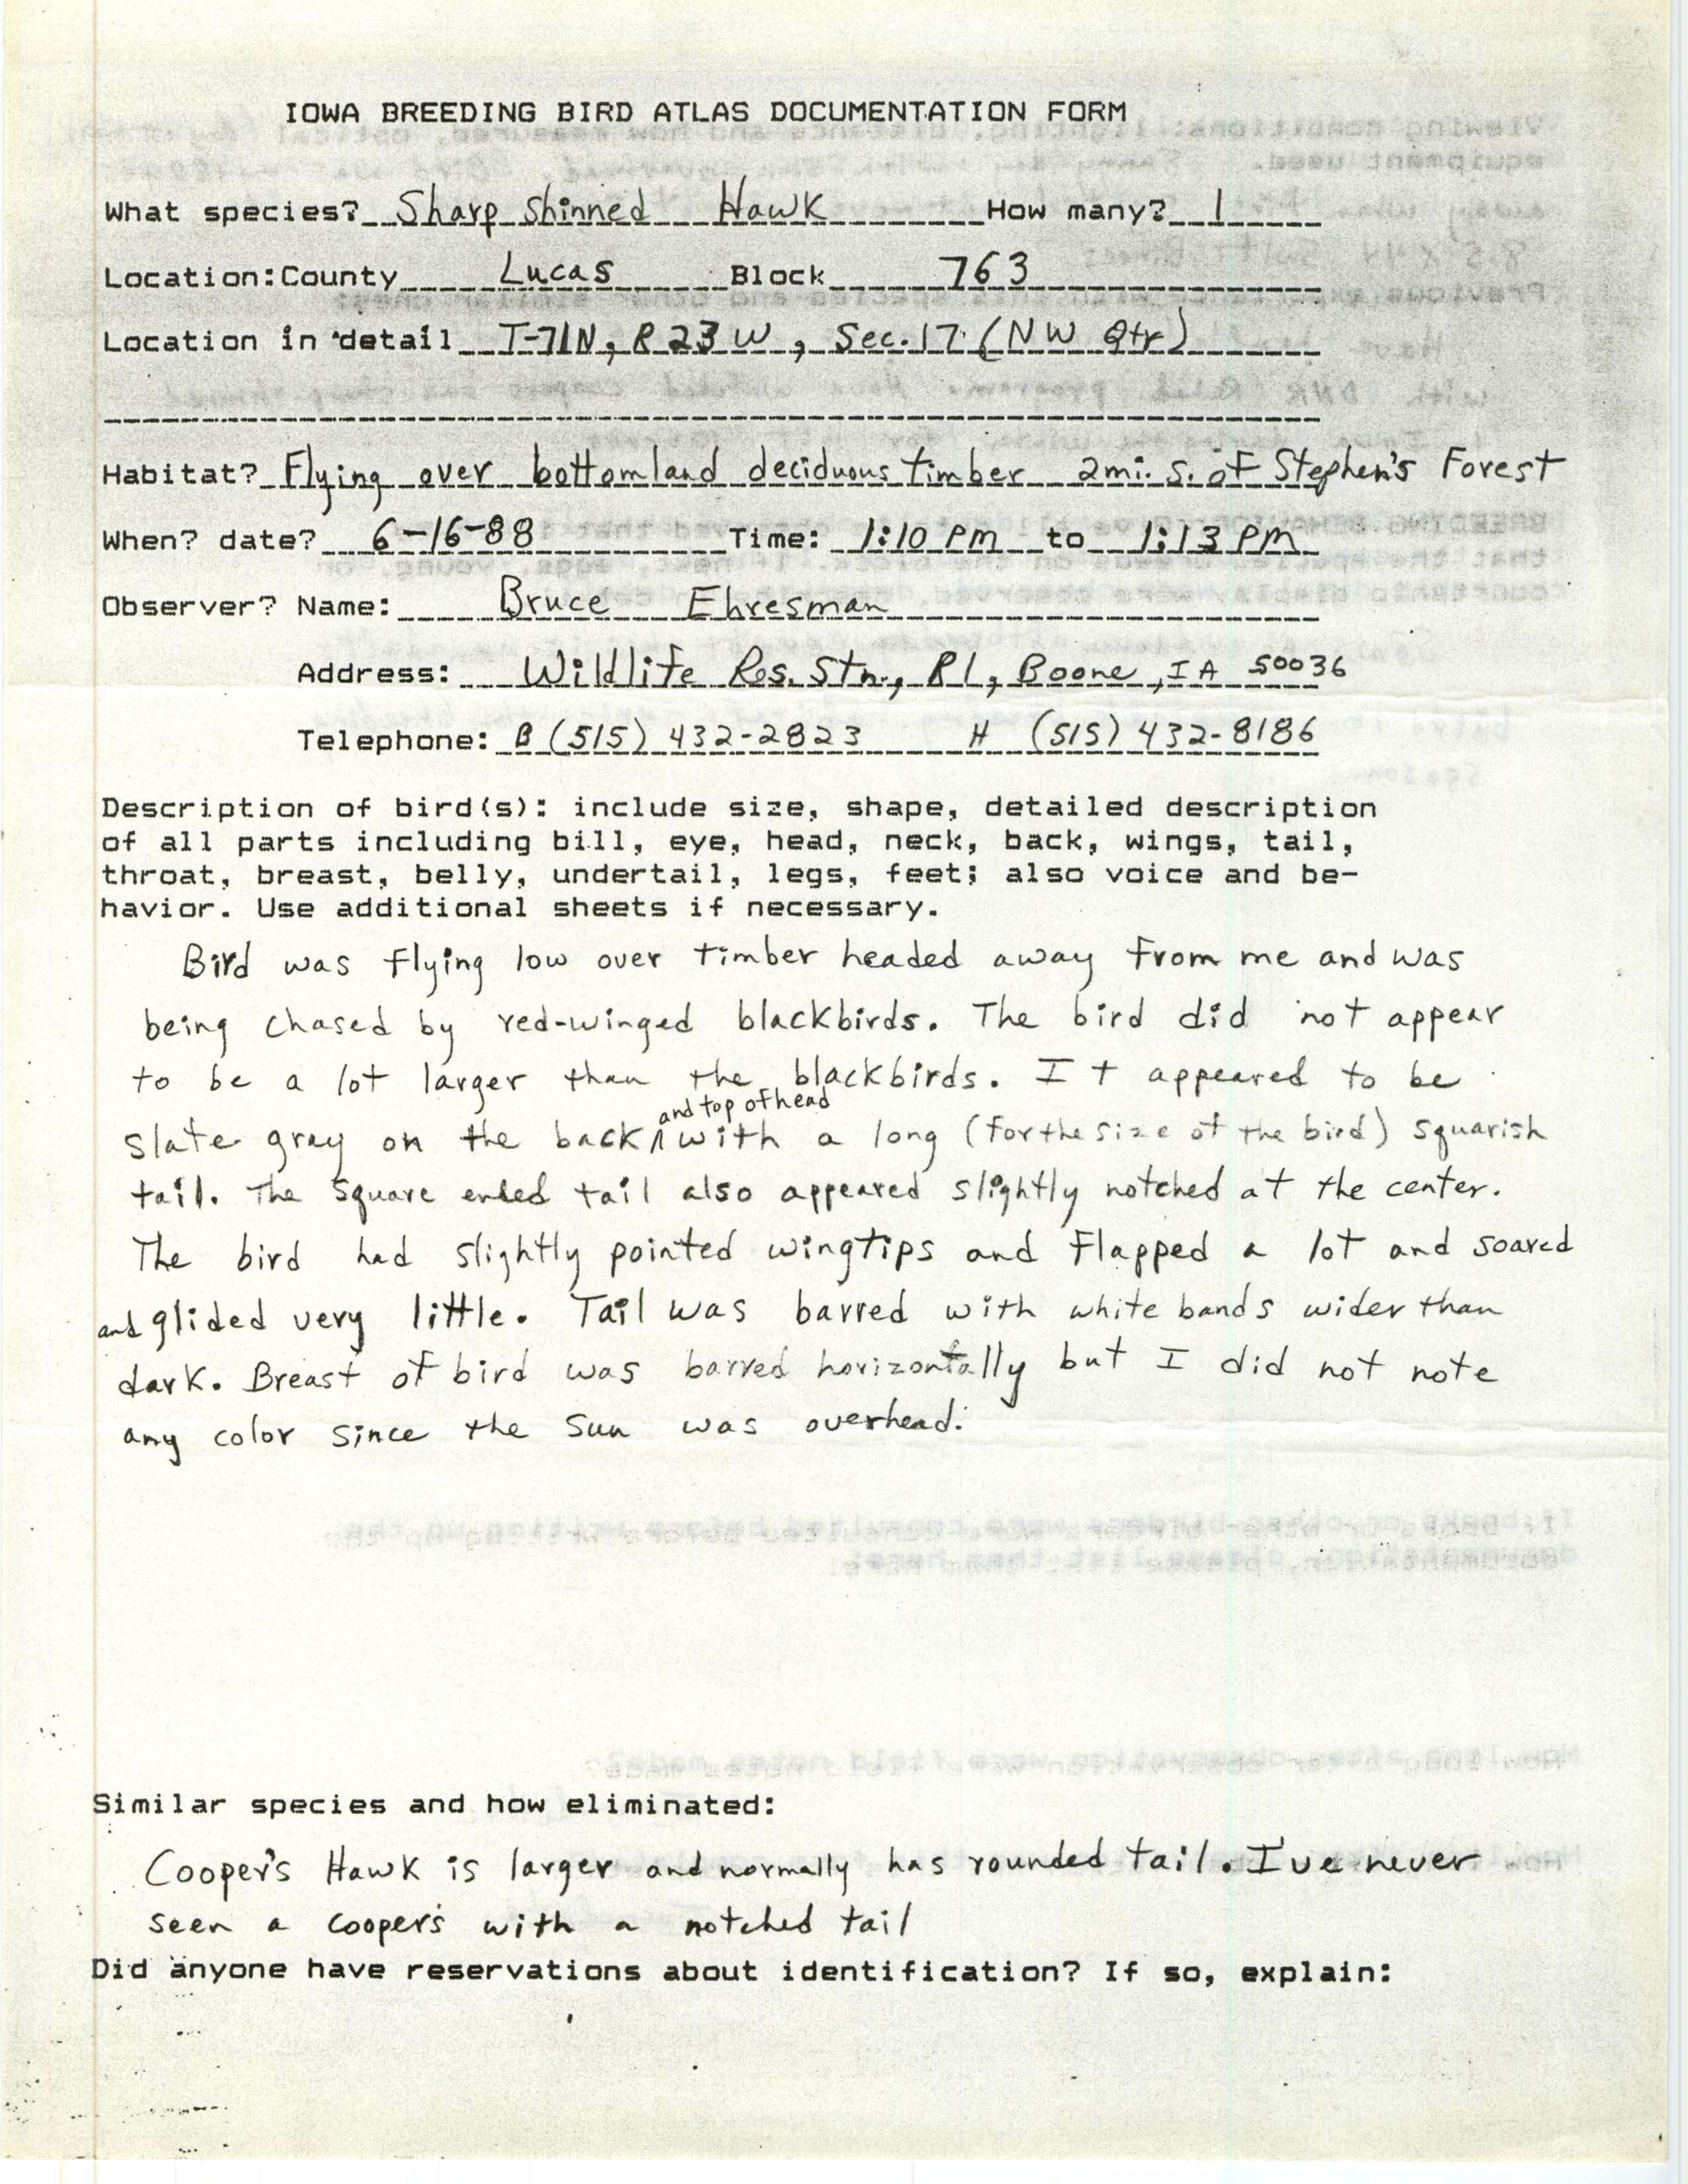 Rare bird documentation form for Sharp-shinned Hawk at Lucas County, 1988